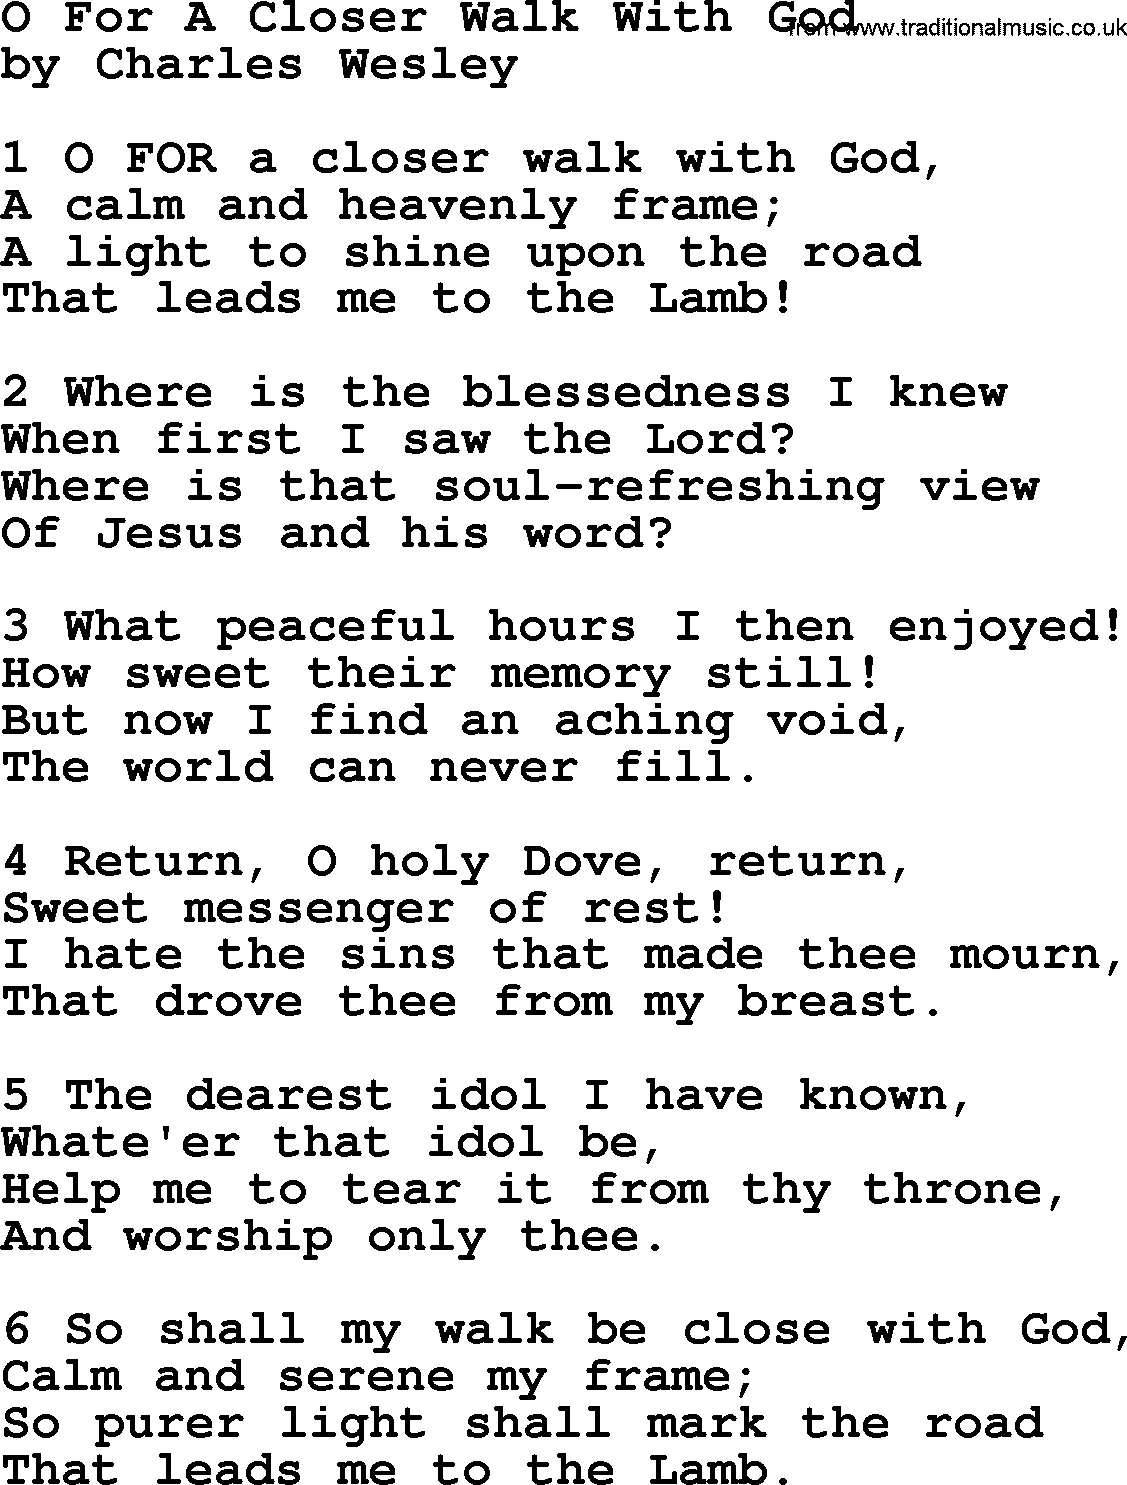 Charles Wesley hymn: O For A Closer Walk With God, lyrics